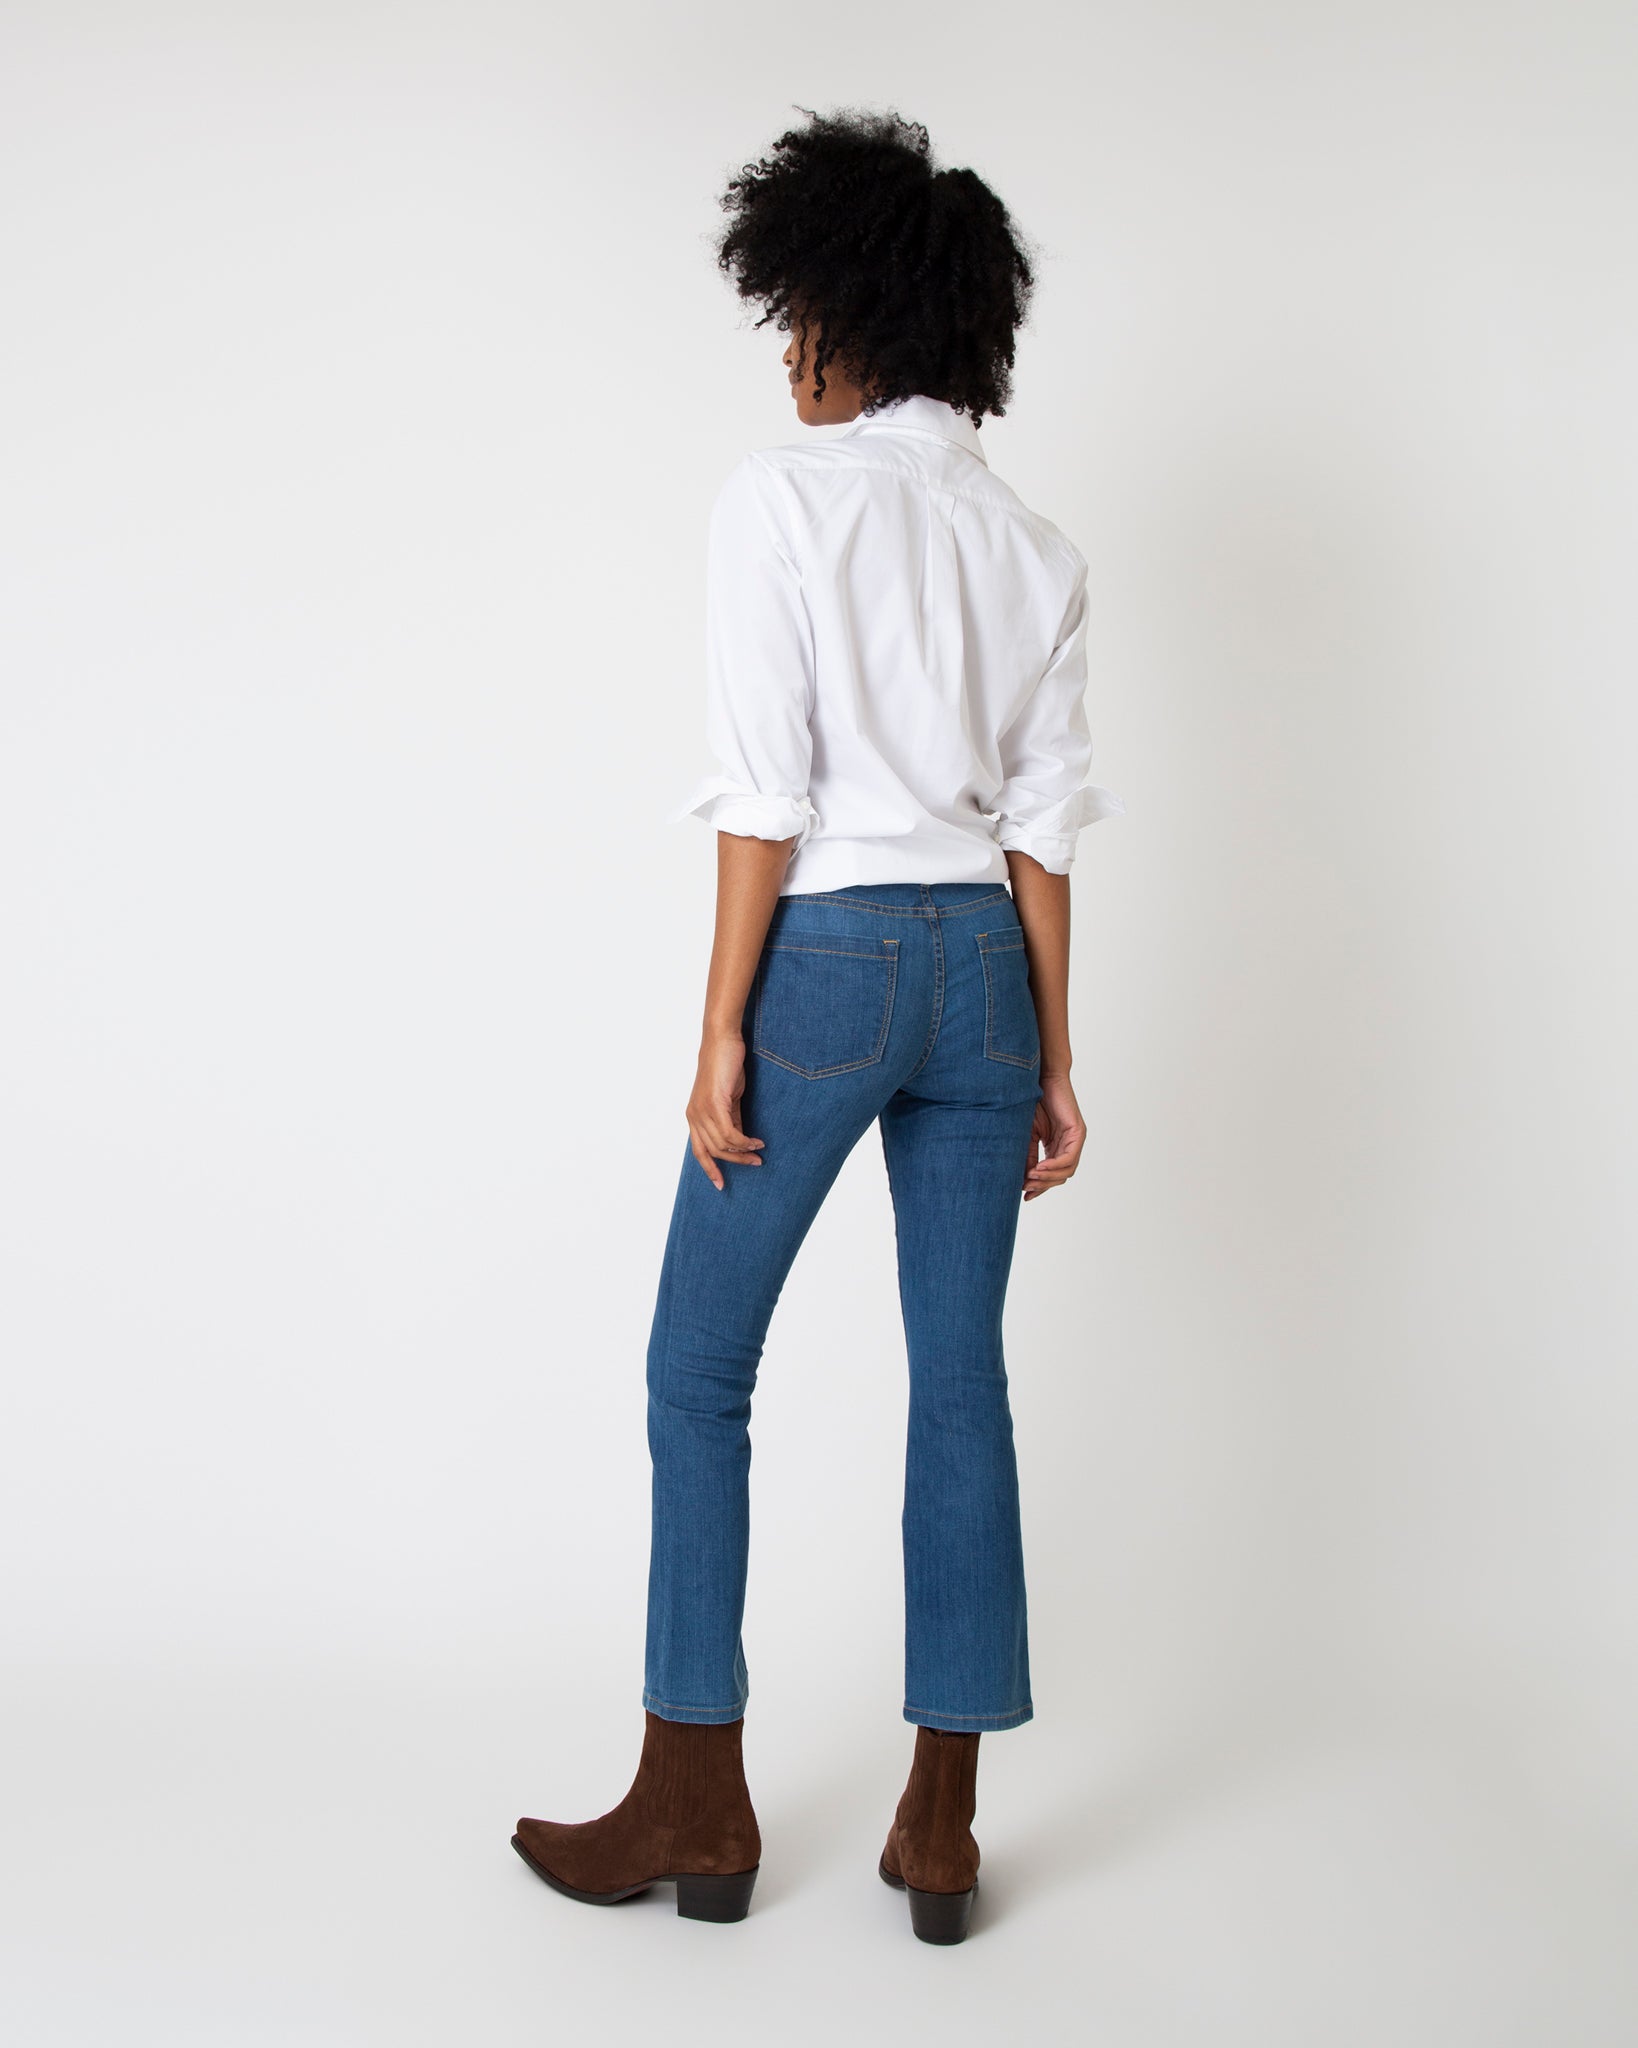 Flare Cropped 5-Pocket Jean in 3-Year Indigo Stretch Denim